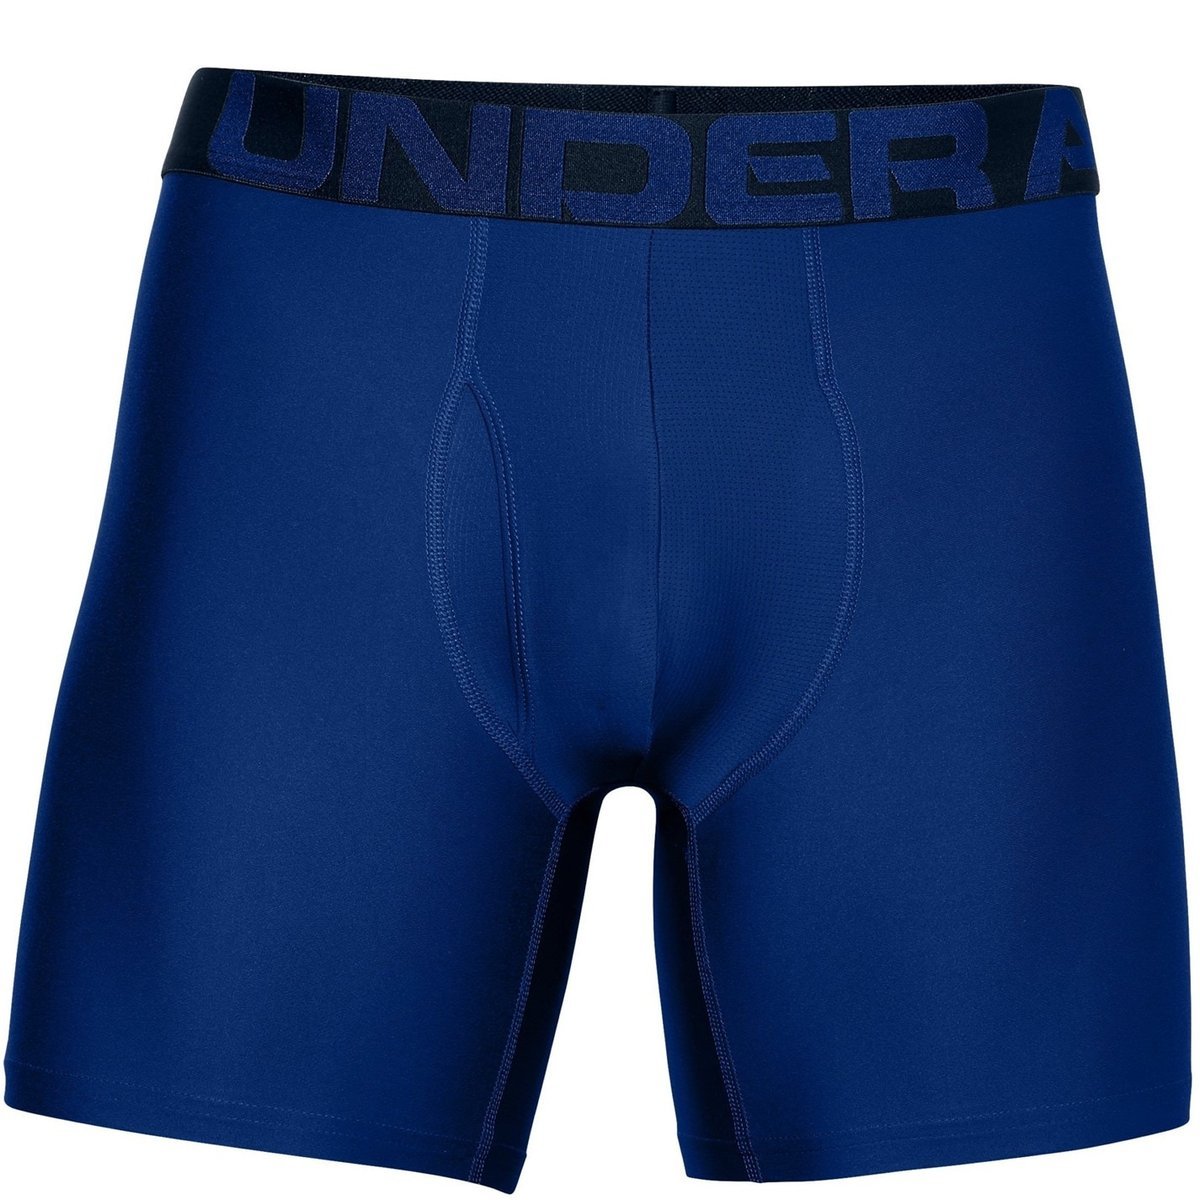 OddBalls - BRAND NEW - Official Underwear for Scarlets